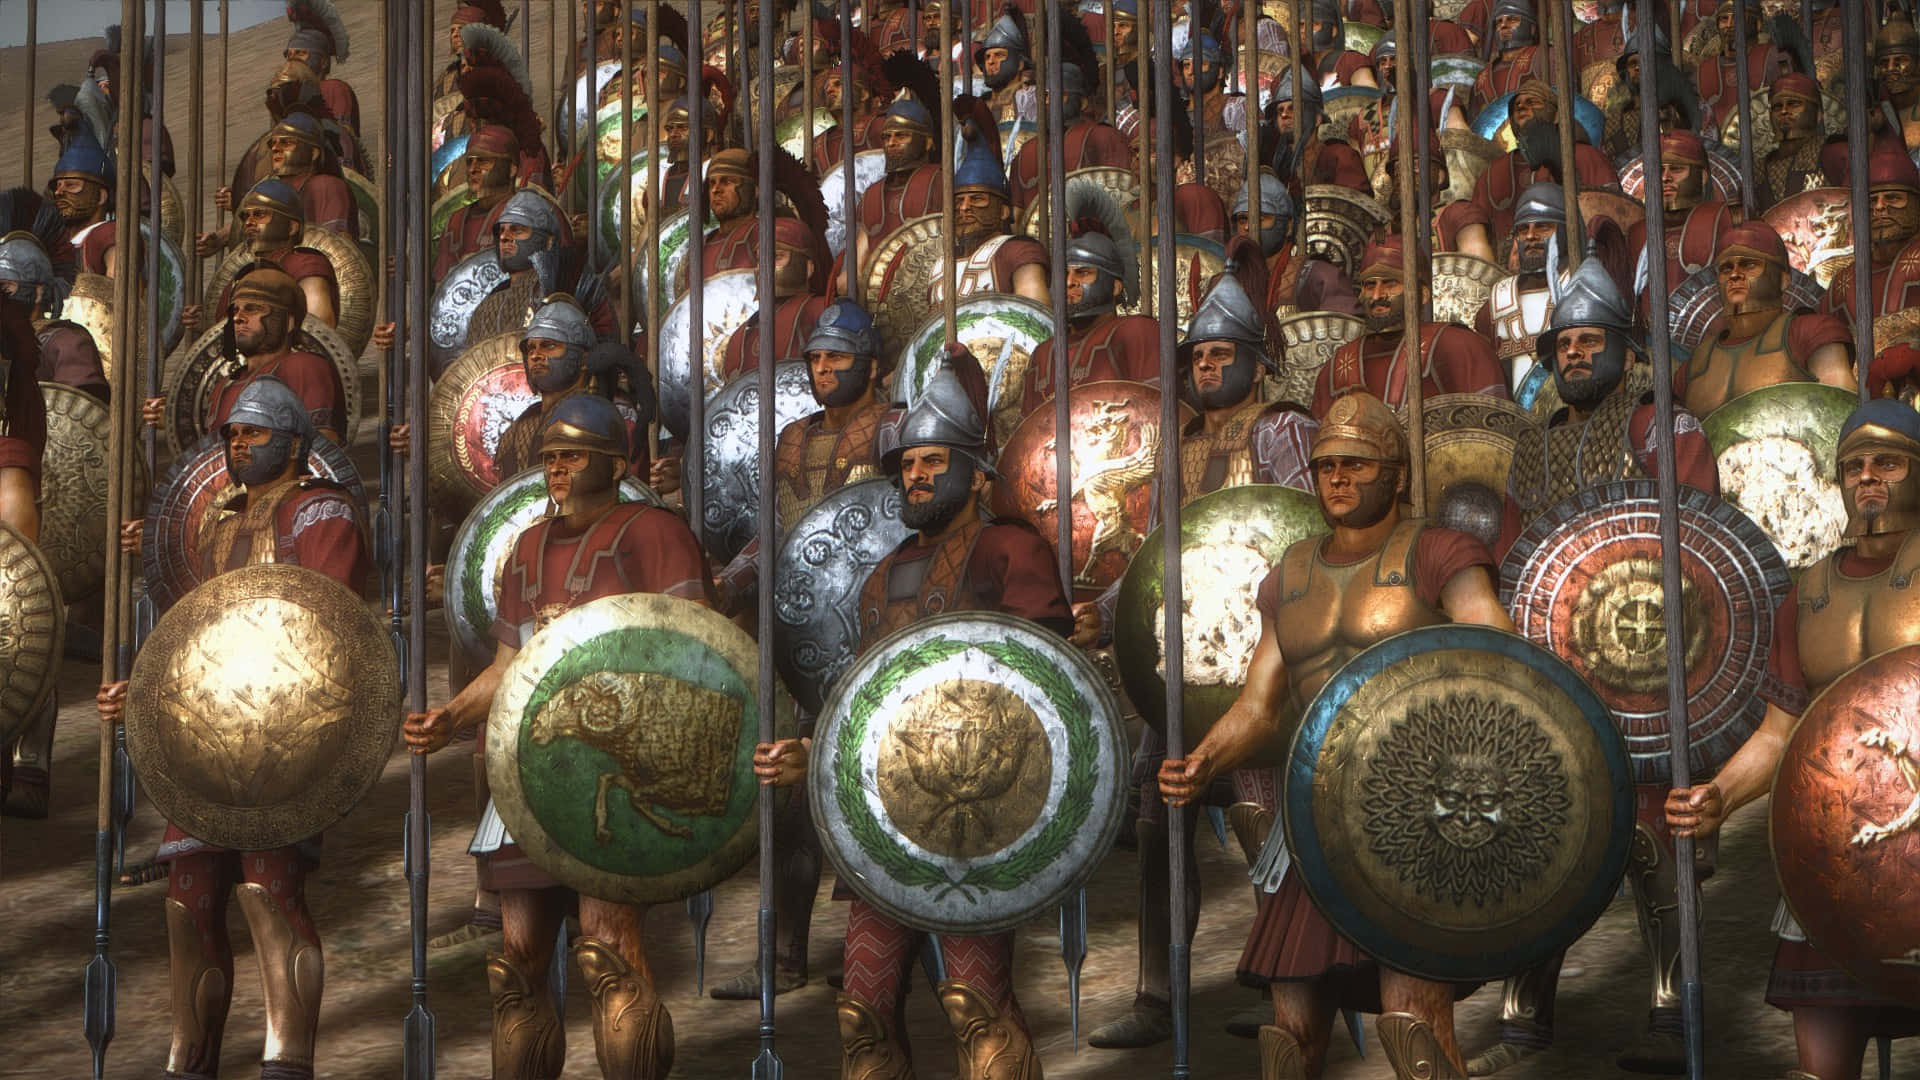 Majestic Illustration of Total War: Rome 2 Battle Scene